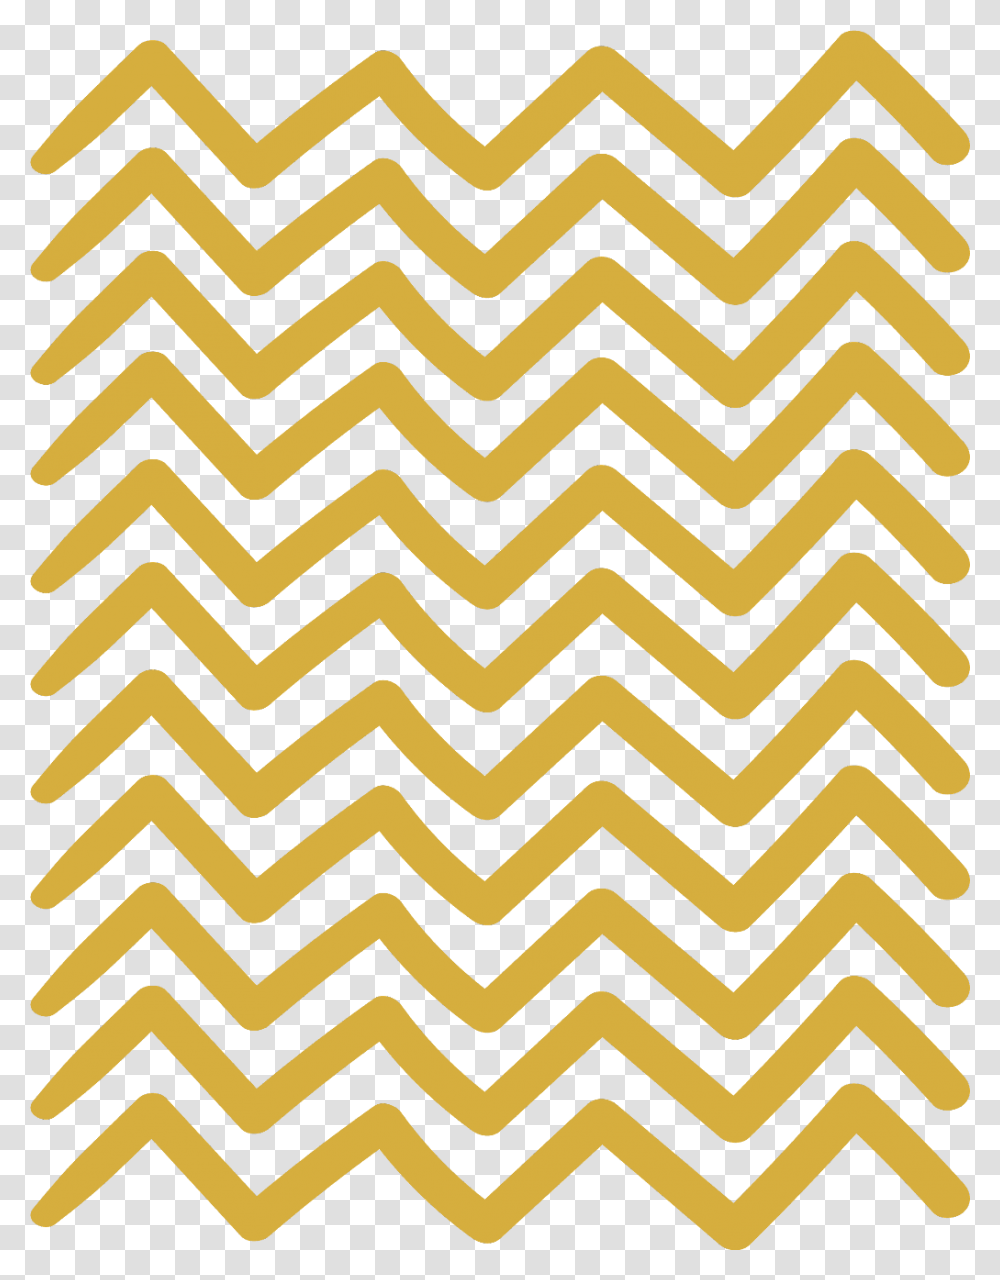 Gold Chevron Pattern Background Decor Decorations The Pyramid Scheme, Rug, Mat, Cushion, Home Decor Transparent Png